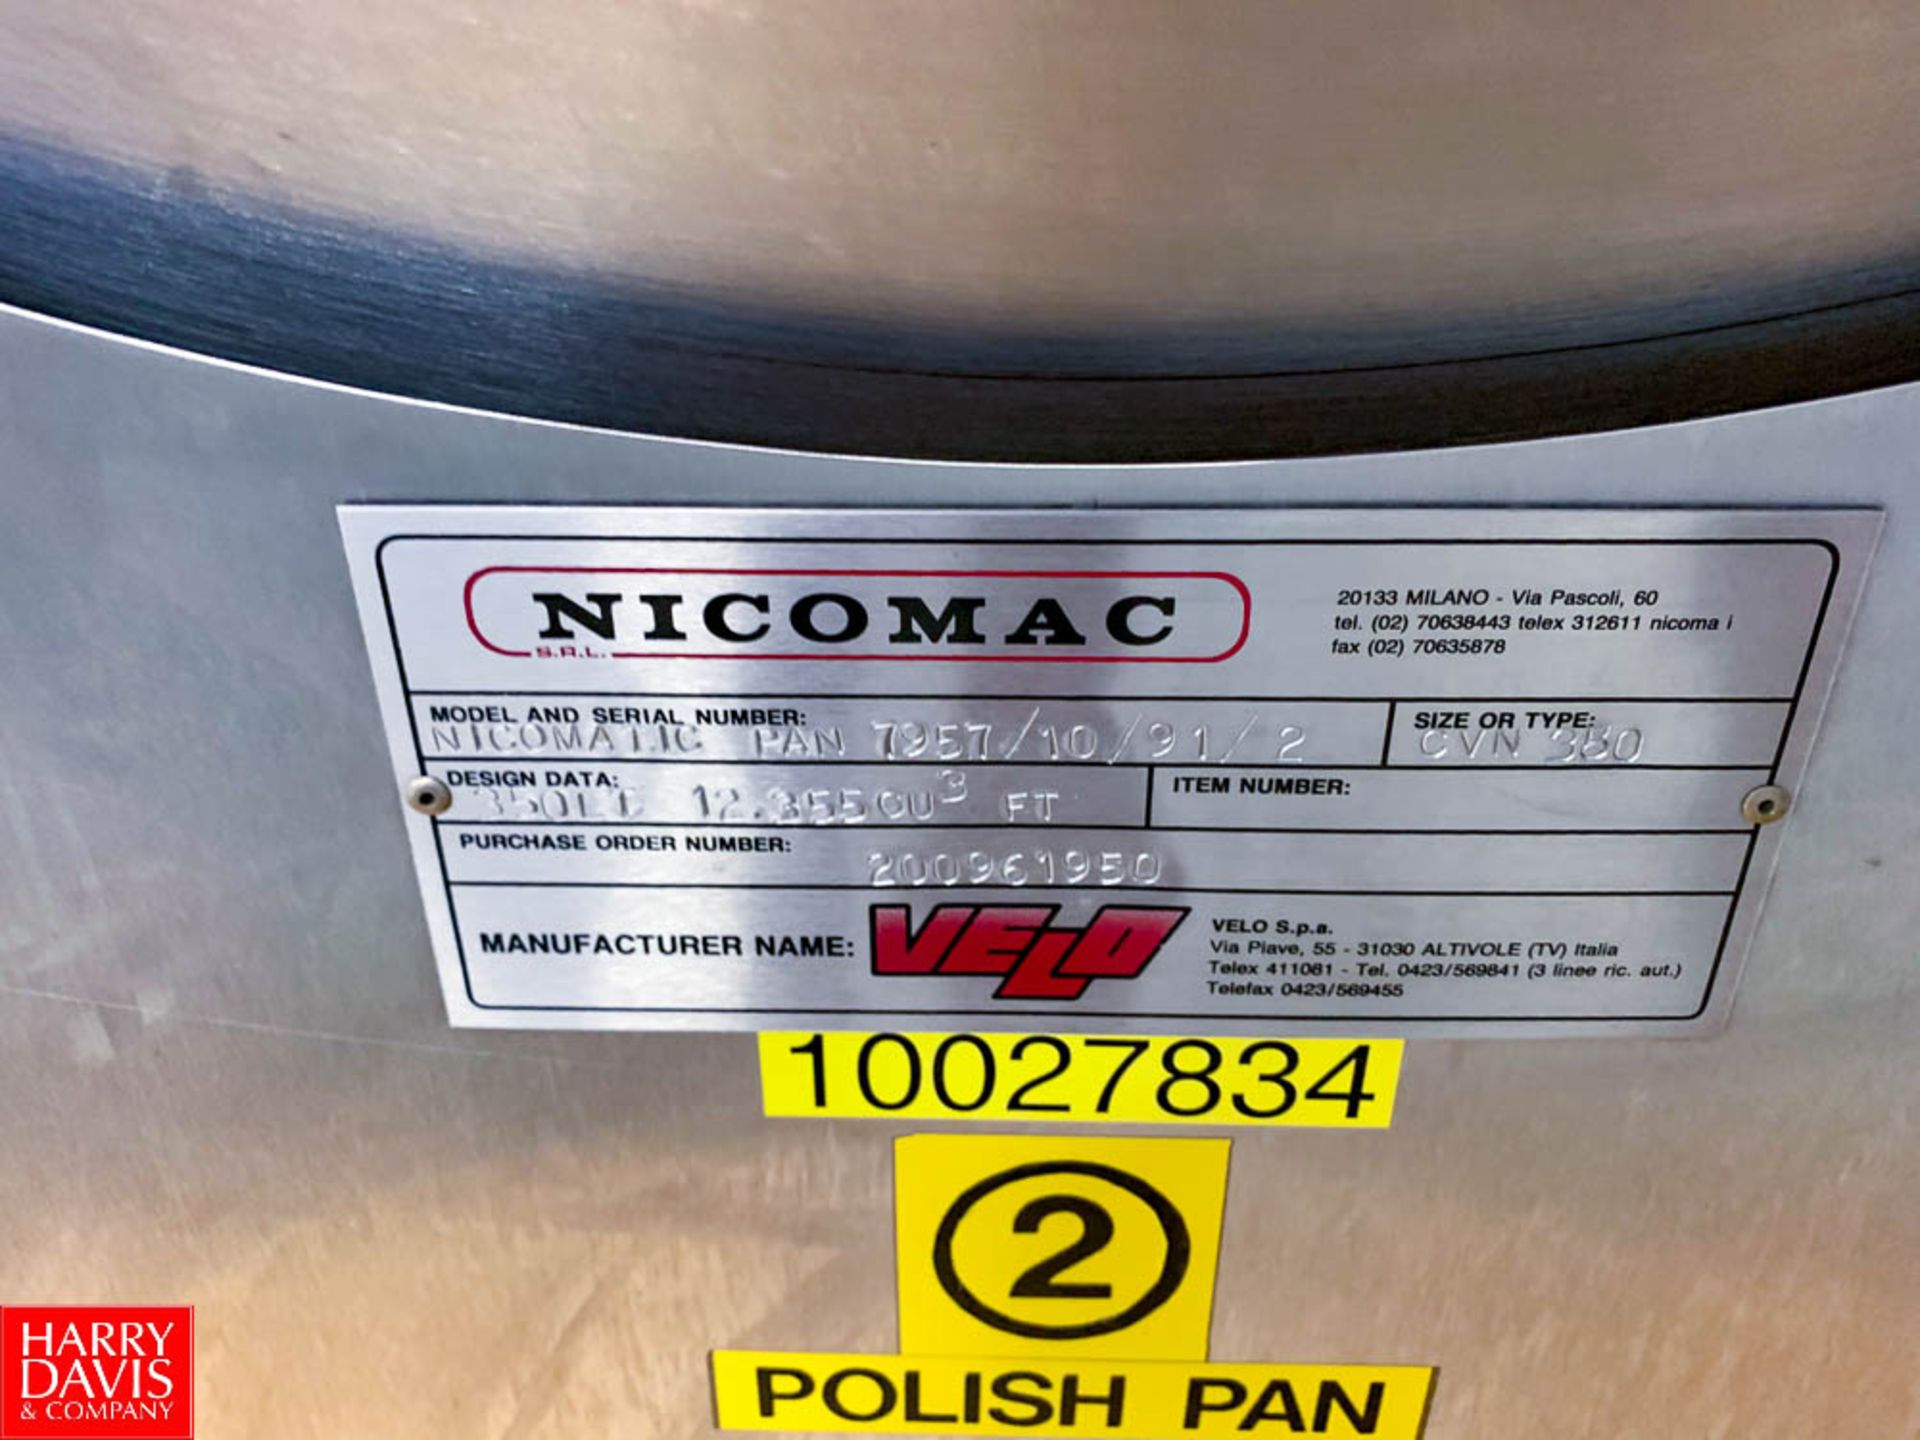 Velo Nicomac S/S Polishing Pan Model Nicomatic Pan, Size CVN 350, S/N 7957/10/91/2 Rigging Fee: $ - Image 3 of 4